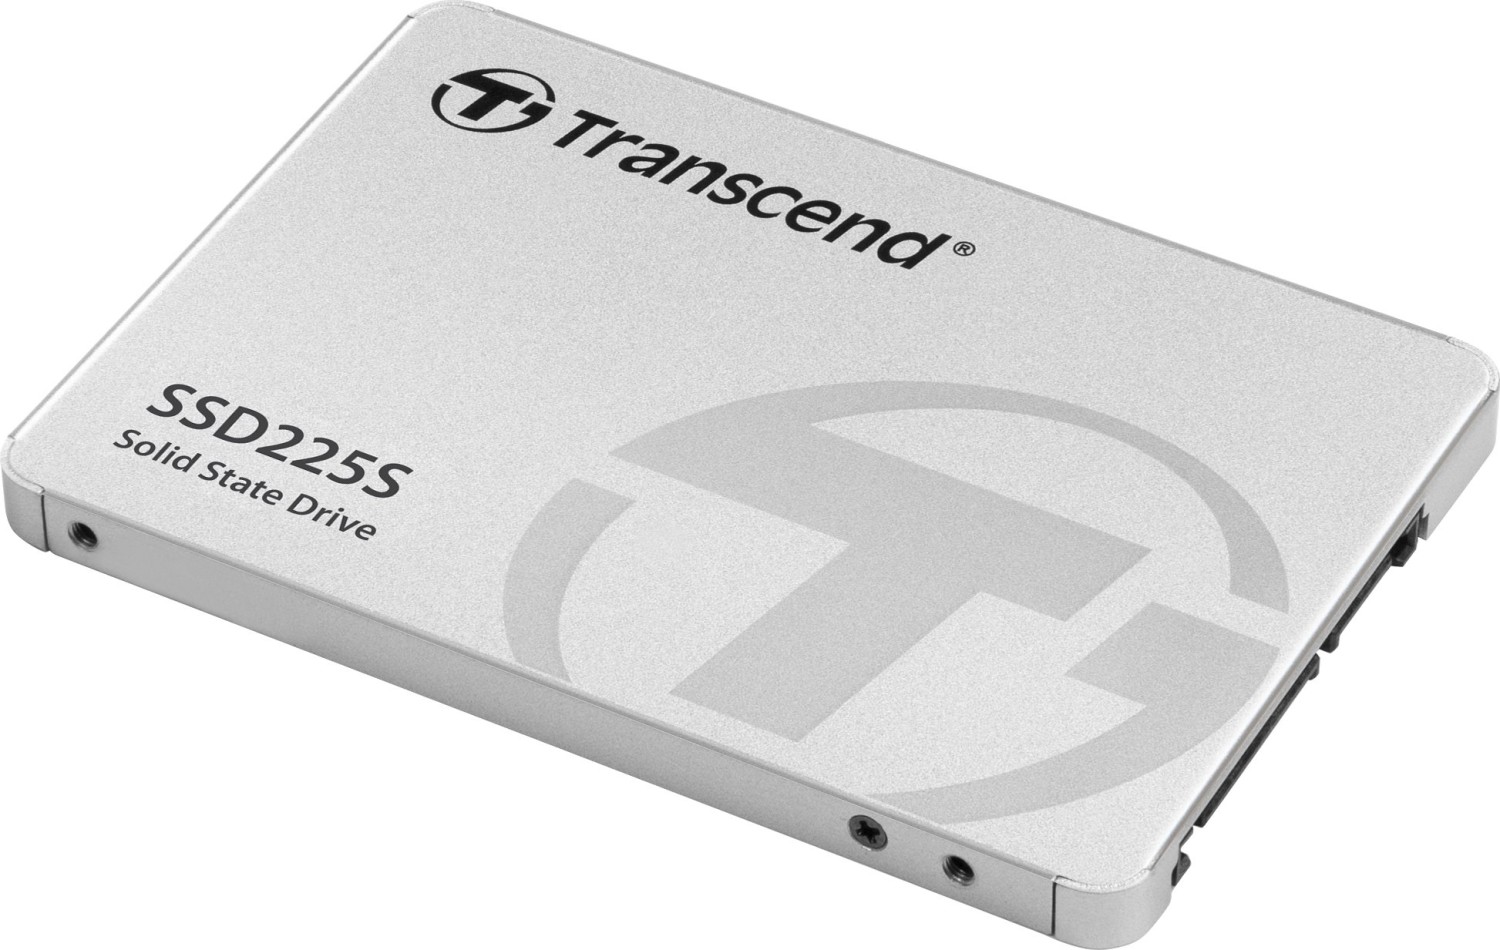 SSD накопитель Transcend 225S 250Gb (TS250GSSD225S)